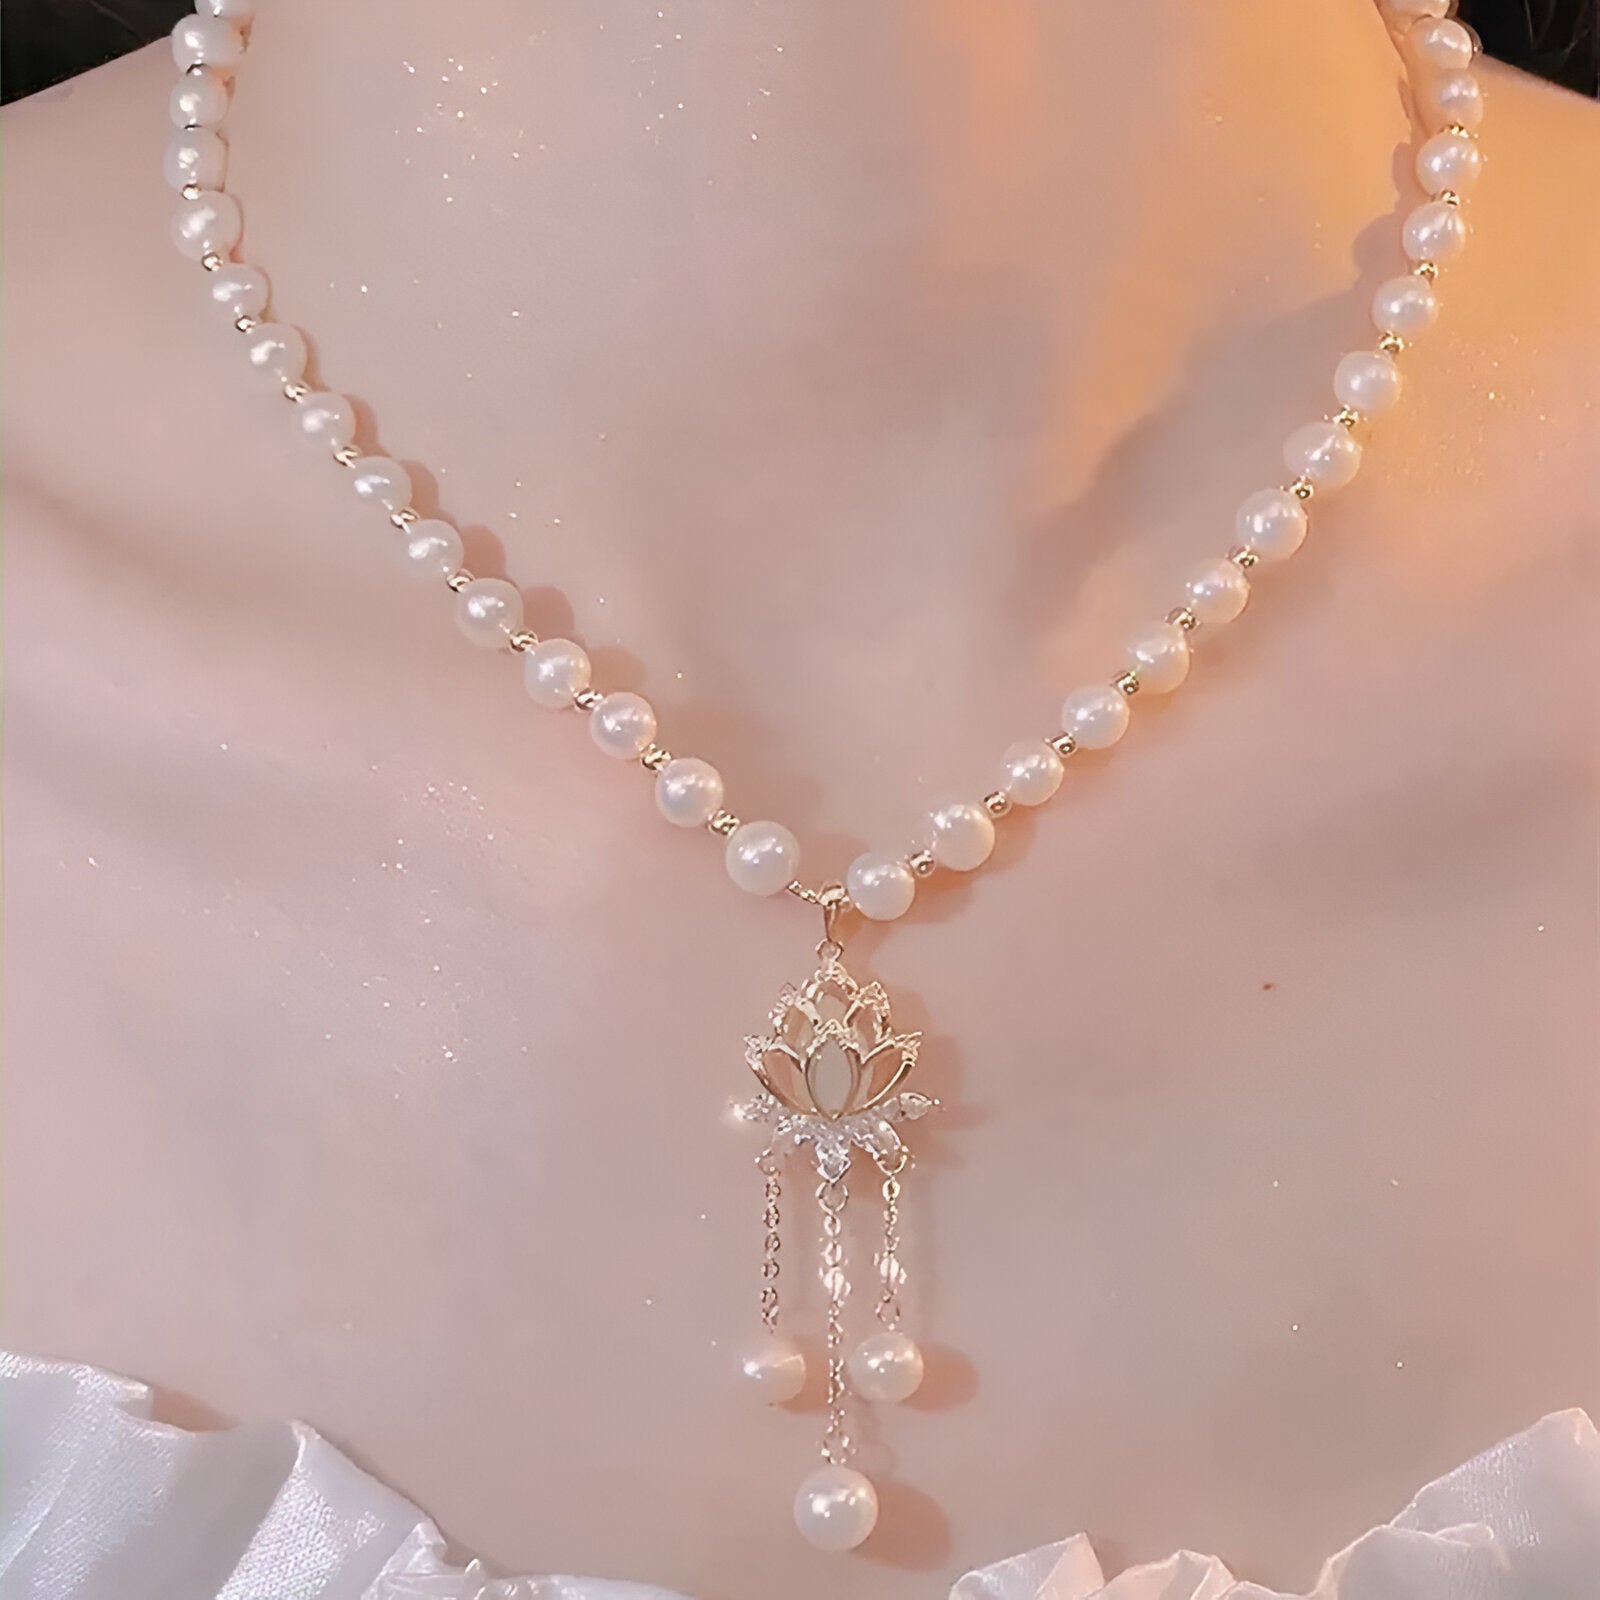 Lotus pearl necklace, elegant and versatile